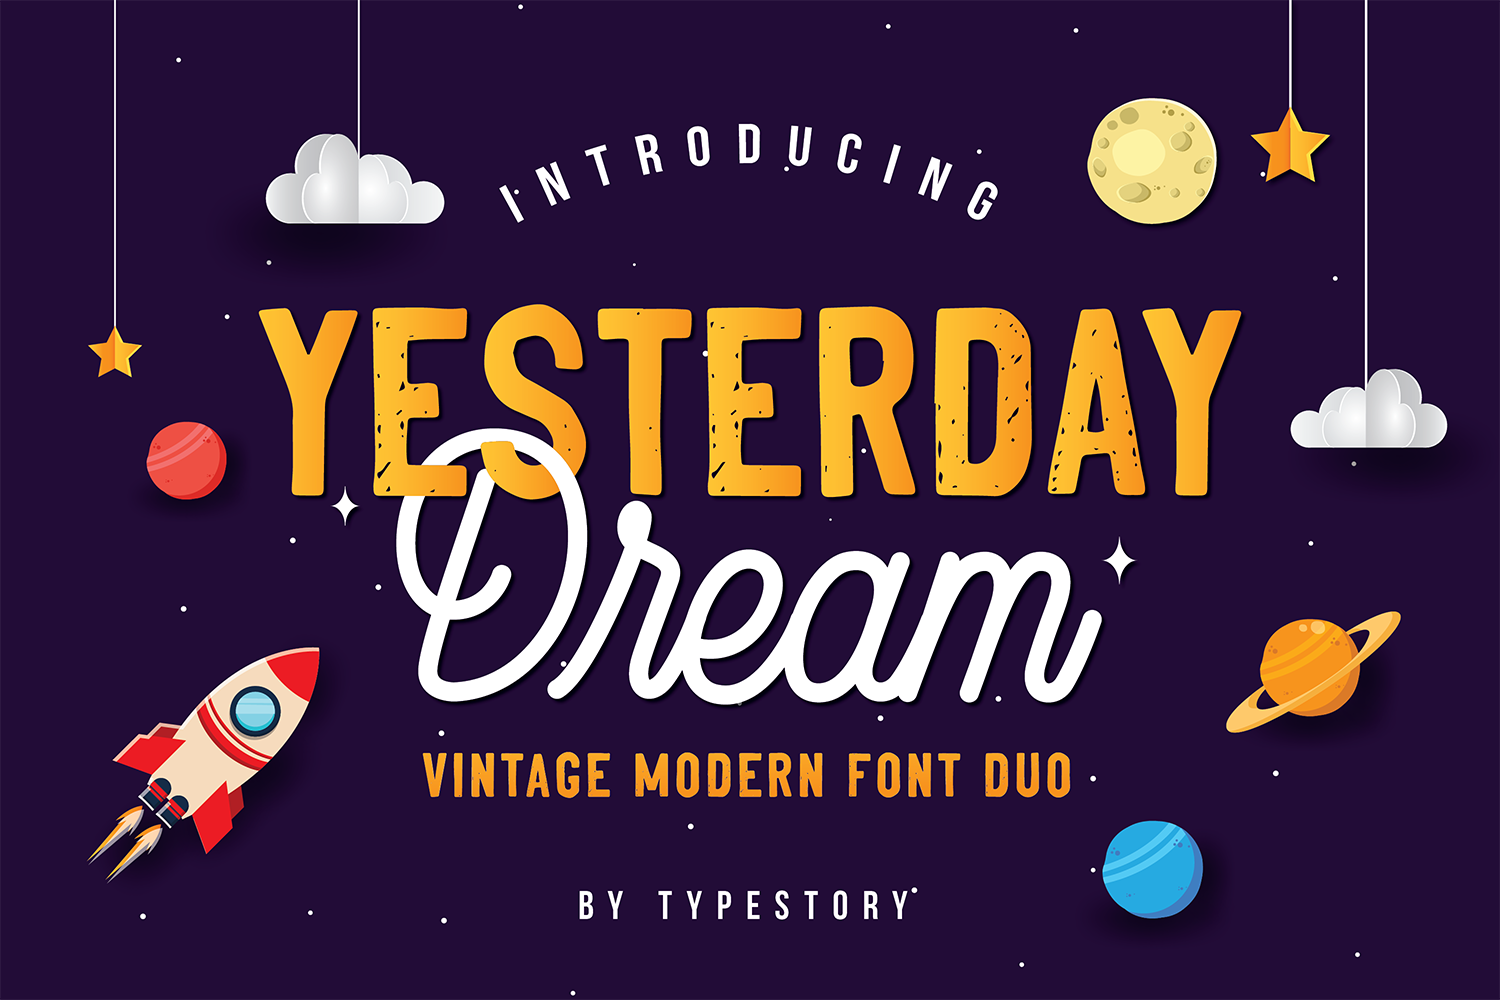 Yesterday Dream Free Font